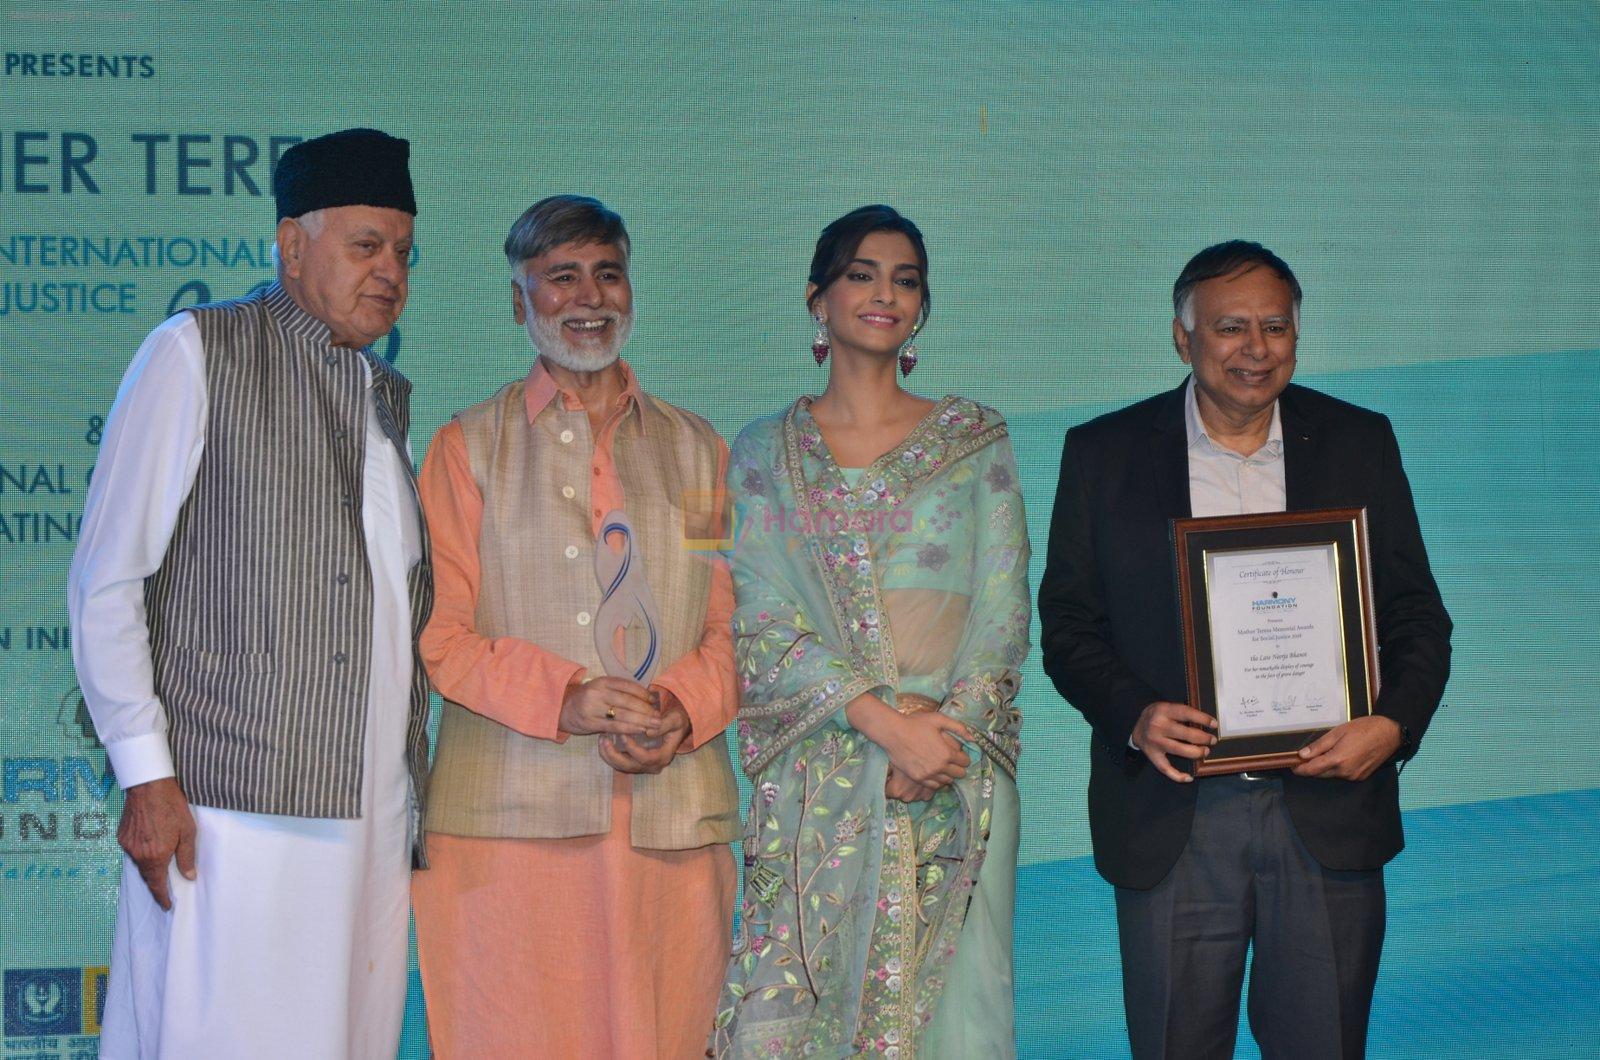 Sonam Kapoor graces Mother Teresa Memorial International Awards on 20th Nov 2016